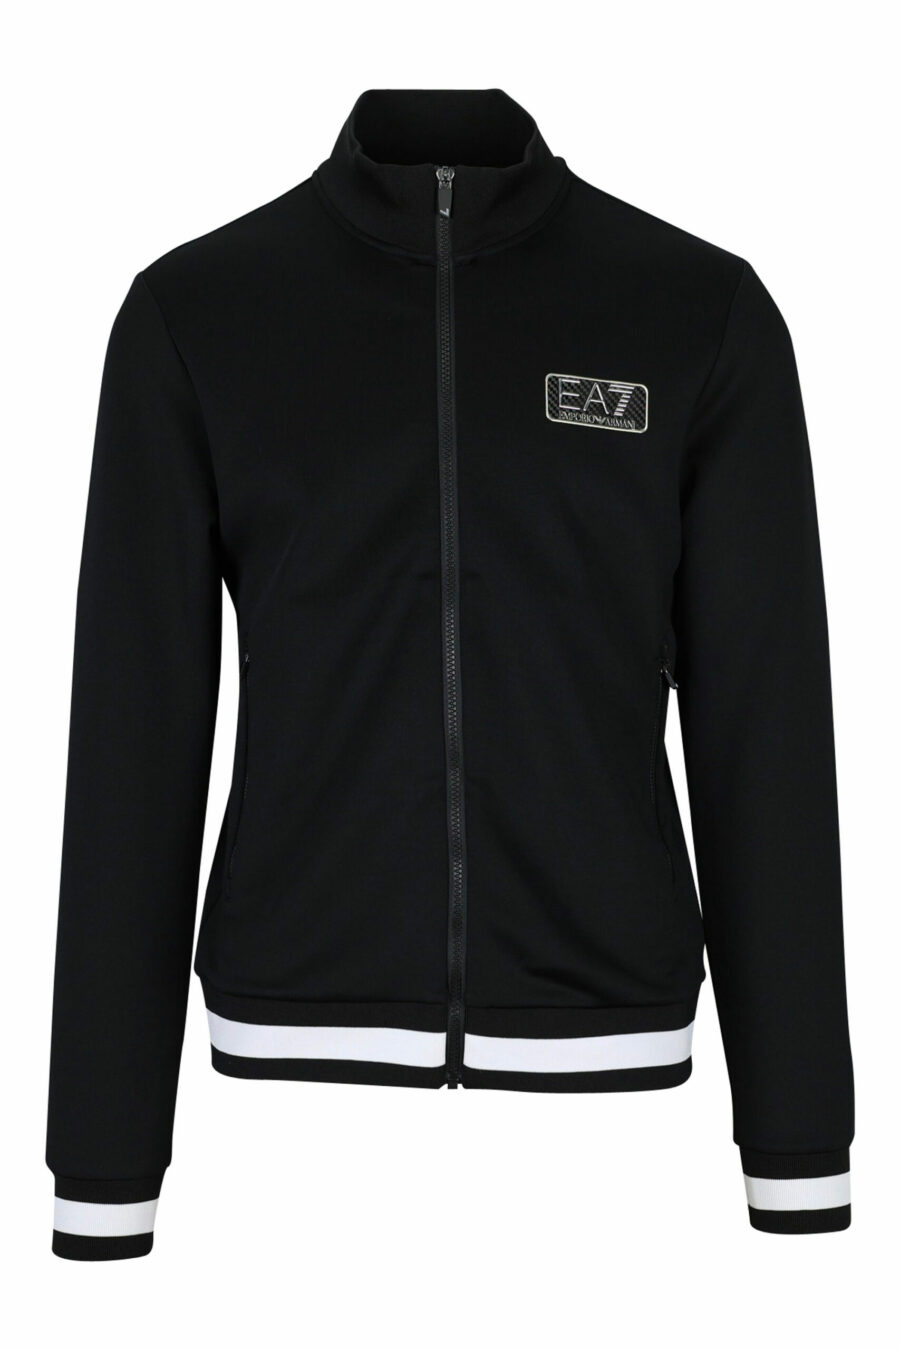 Sweat noir zippé avec mini-logo métallique "lux identity" - 8057767630782 scaled